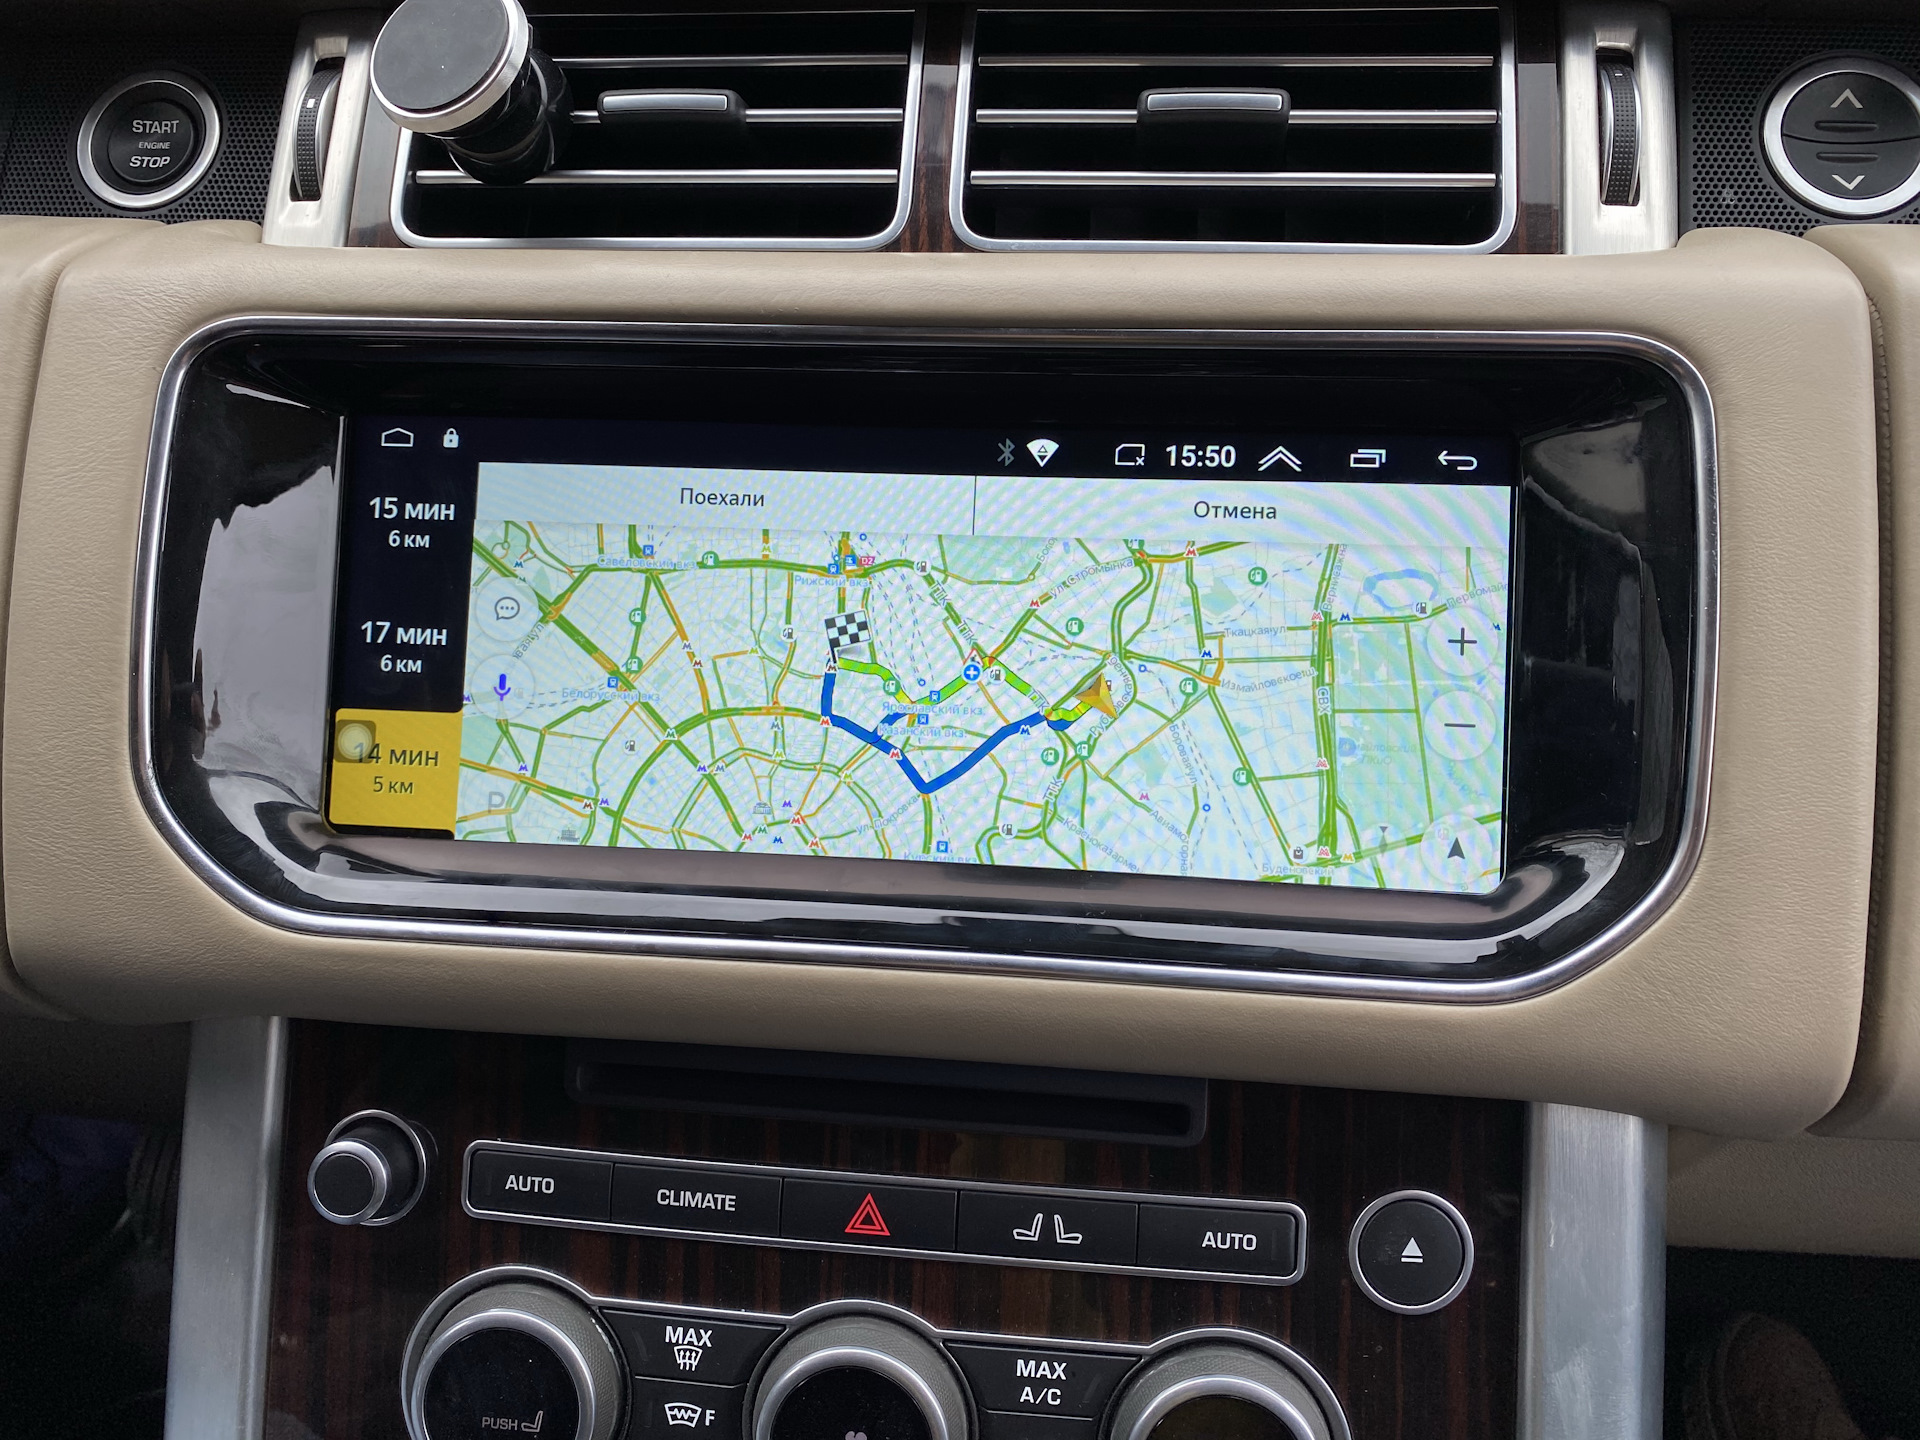 Неутомимая навигация по каналу. Range Rover навигатор. Range Rover 2013 андроид мультимедиа. Навигатор на Рендж Ровер 2006.